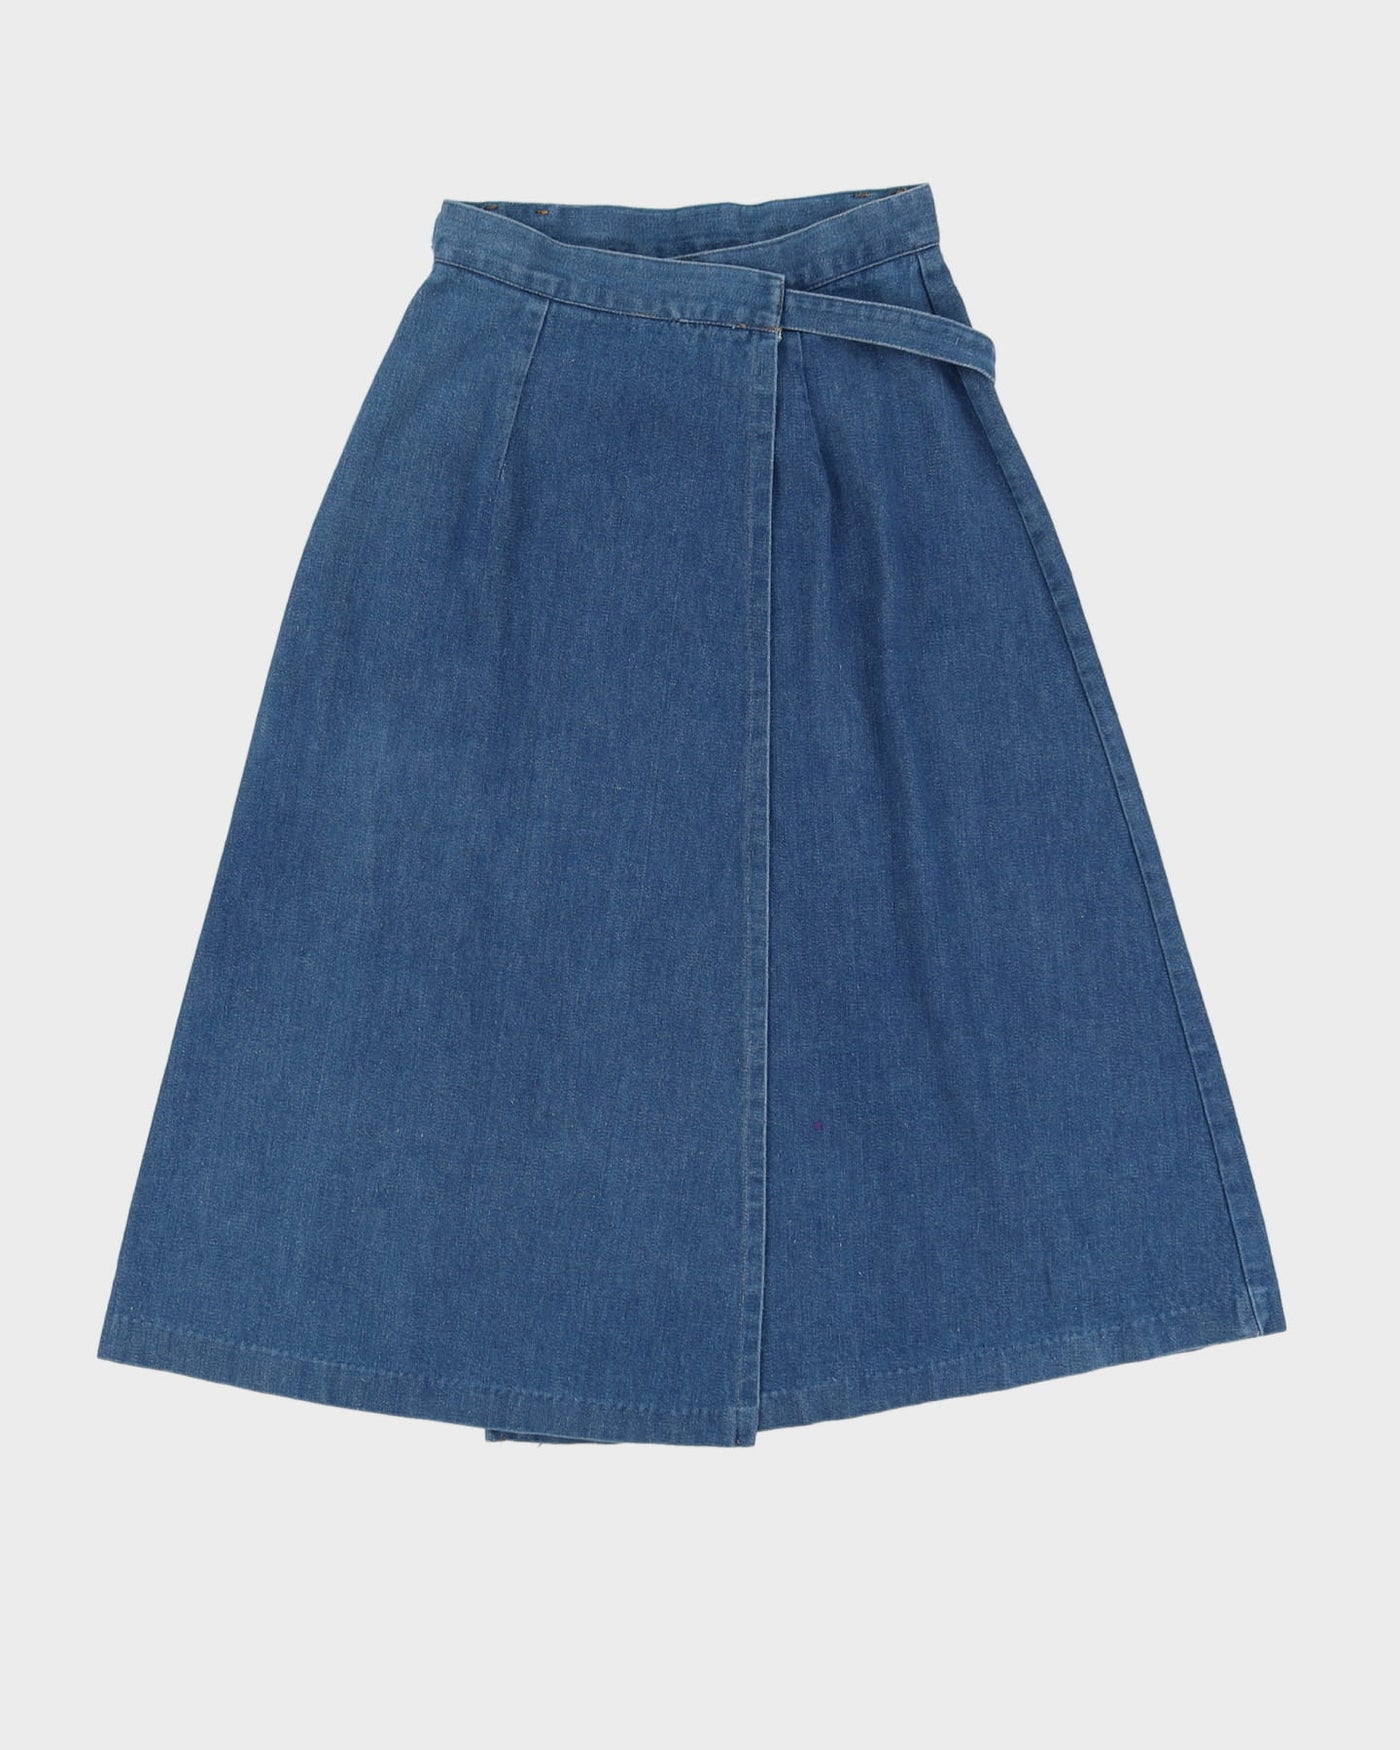 Vintage 1970s Denim Wrap Skirt - XS